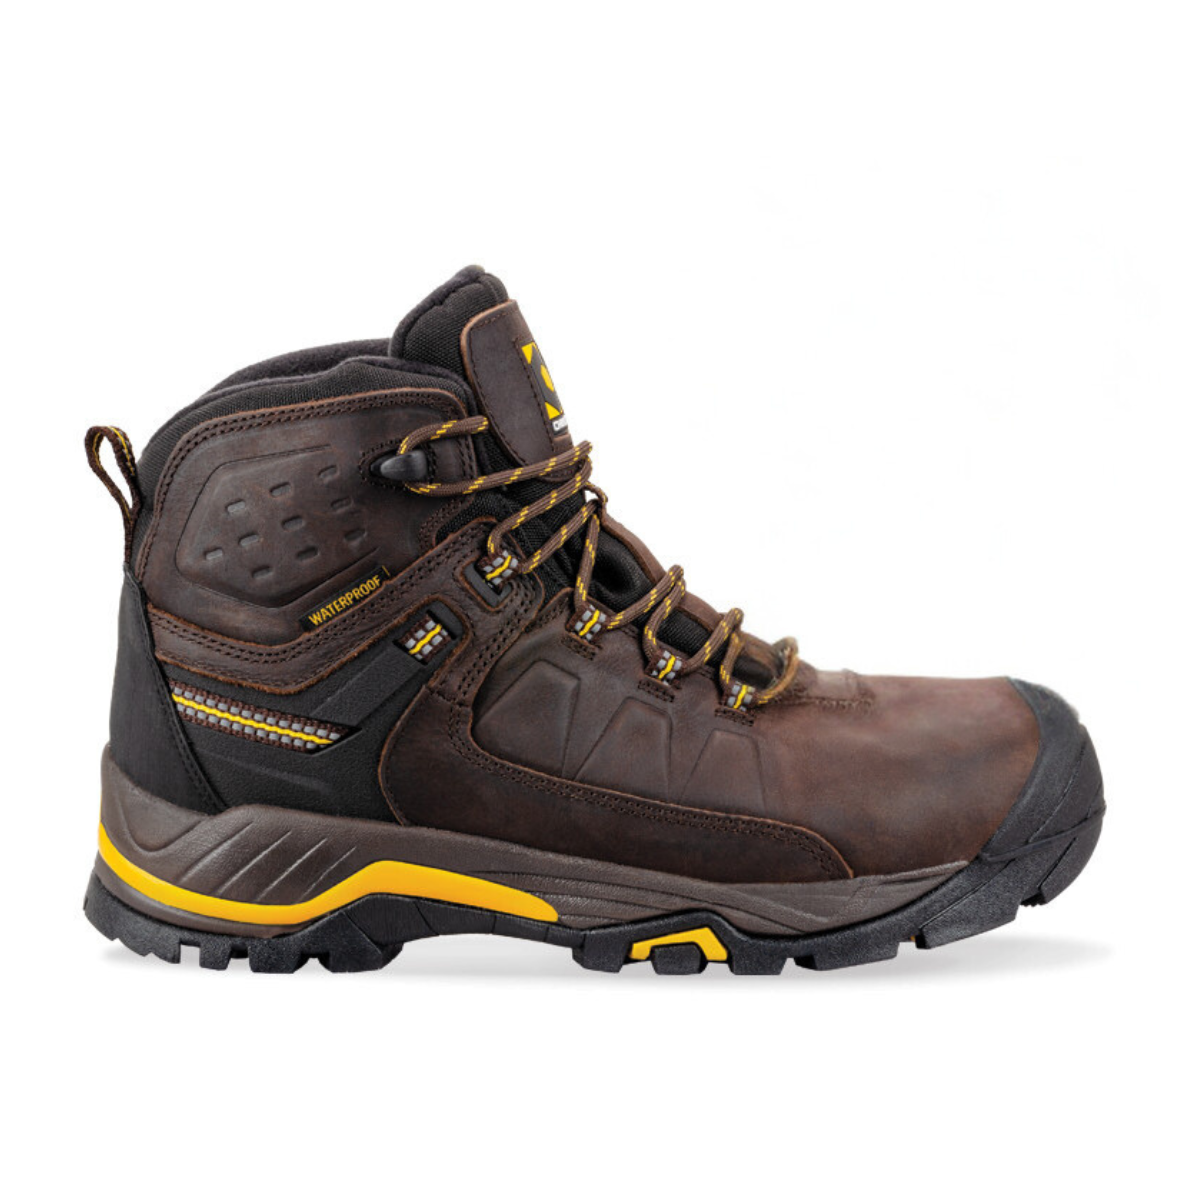 Appalachia 6" Soft Toe Men’s Waterproof Hiker Boot - Brown